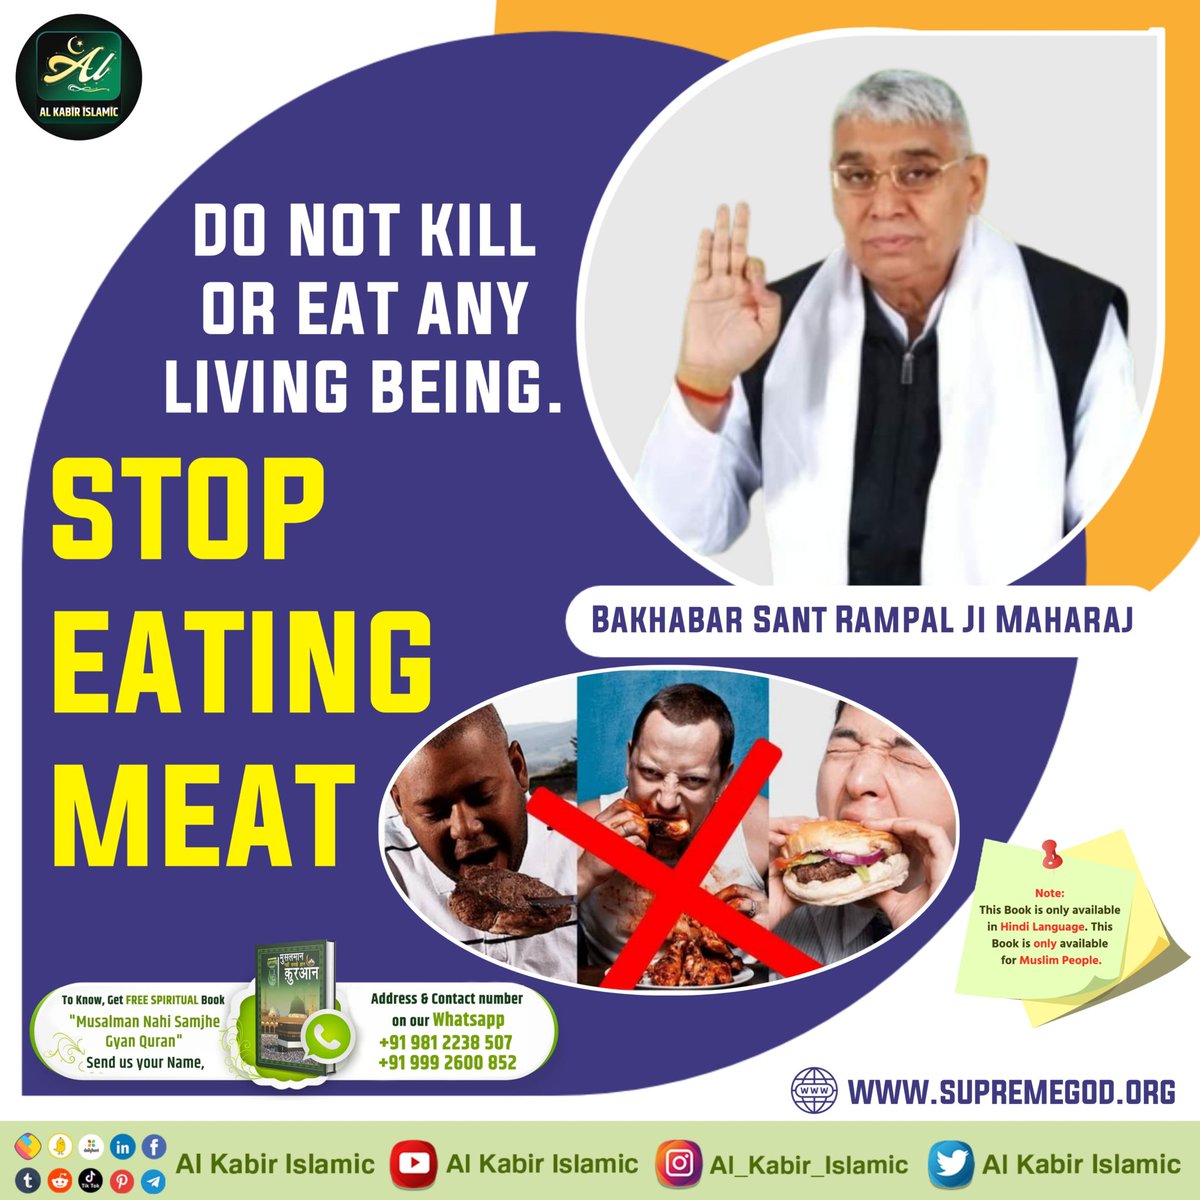 Stop eating meat!
Do not kill or eat any living being.
#AlKabir_Islamic
#SaintRampalJi #SANewsRajsthan 
#PollOfTheDay